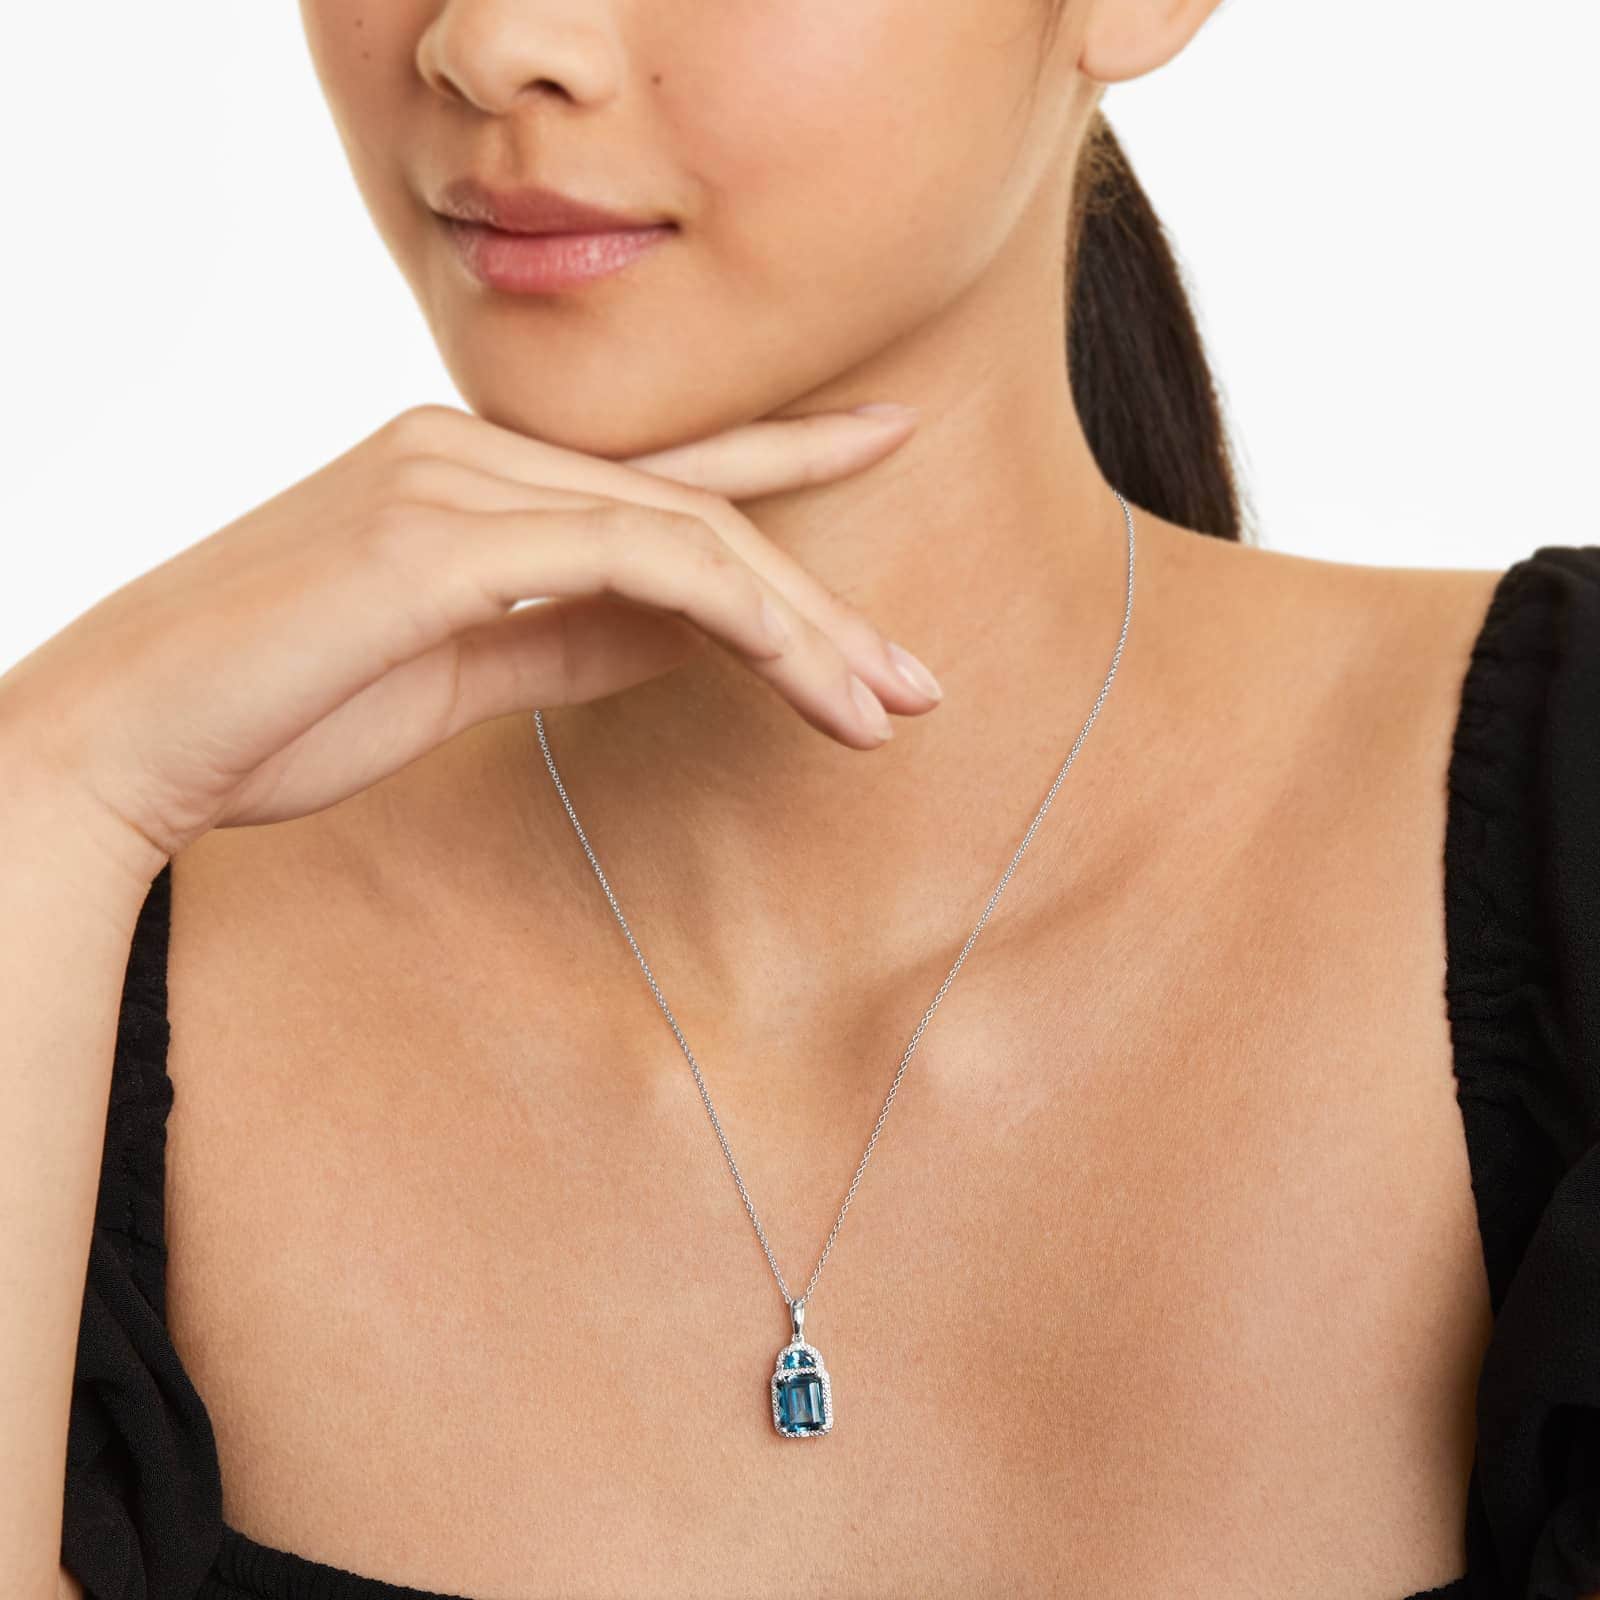 Blue Topaz And Diamond Necklace